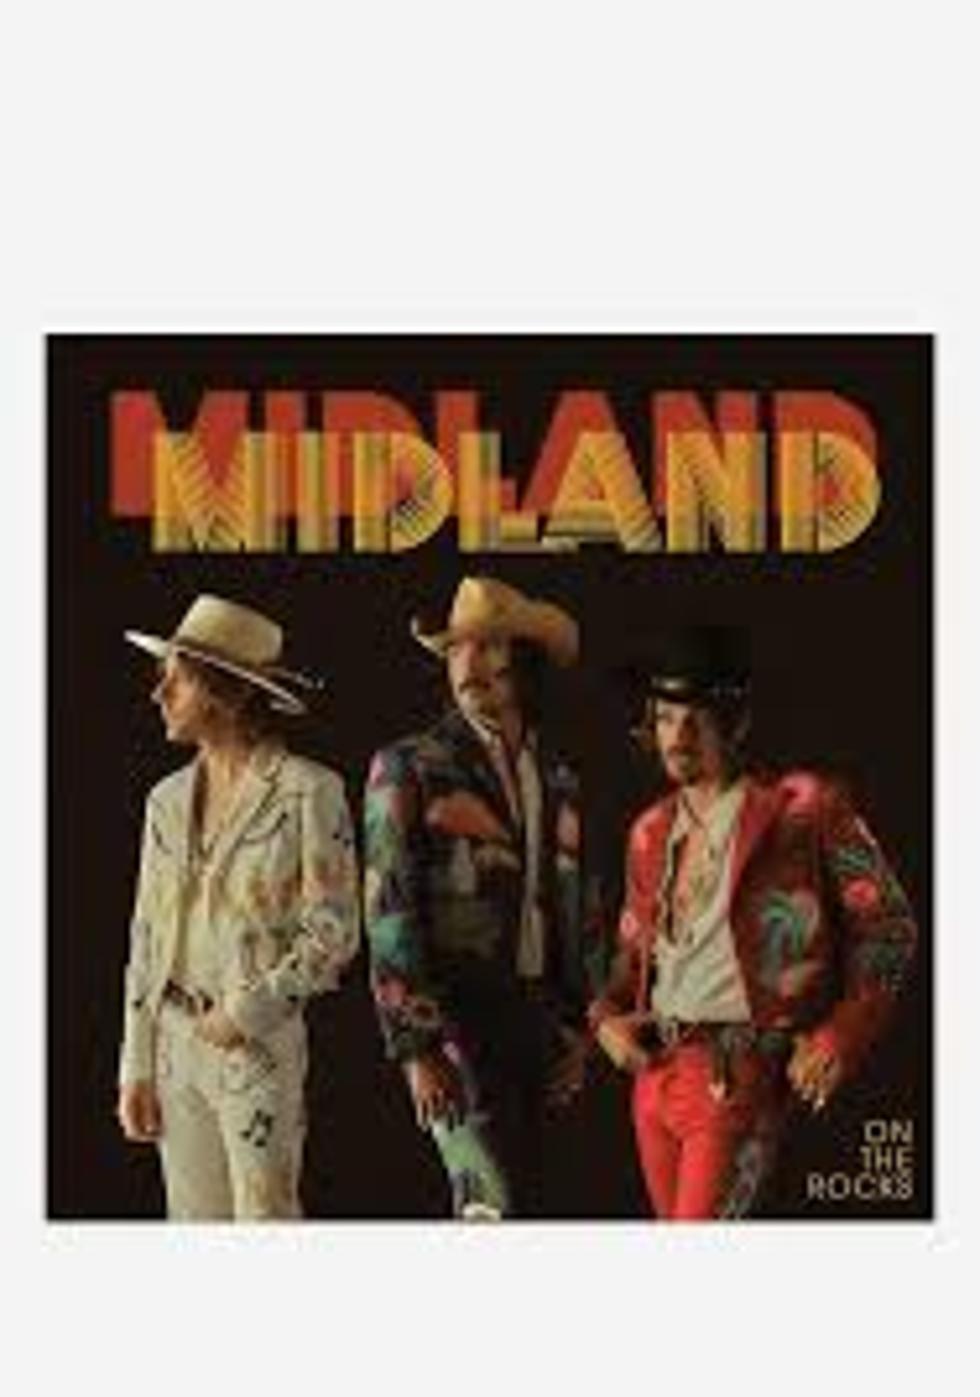 New Music Friday: Midland